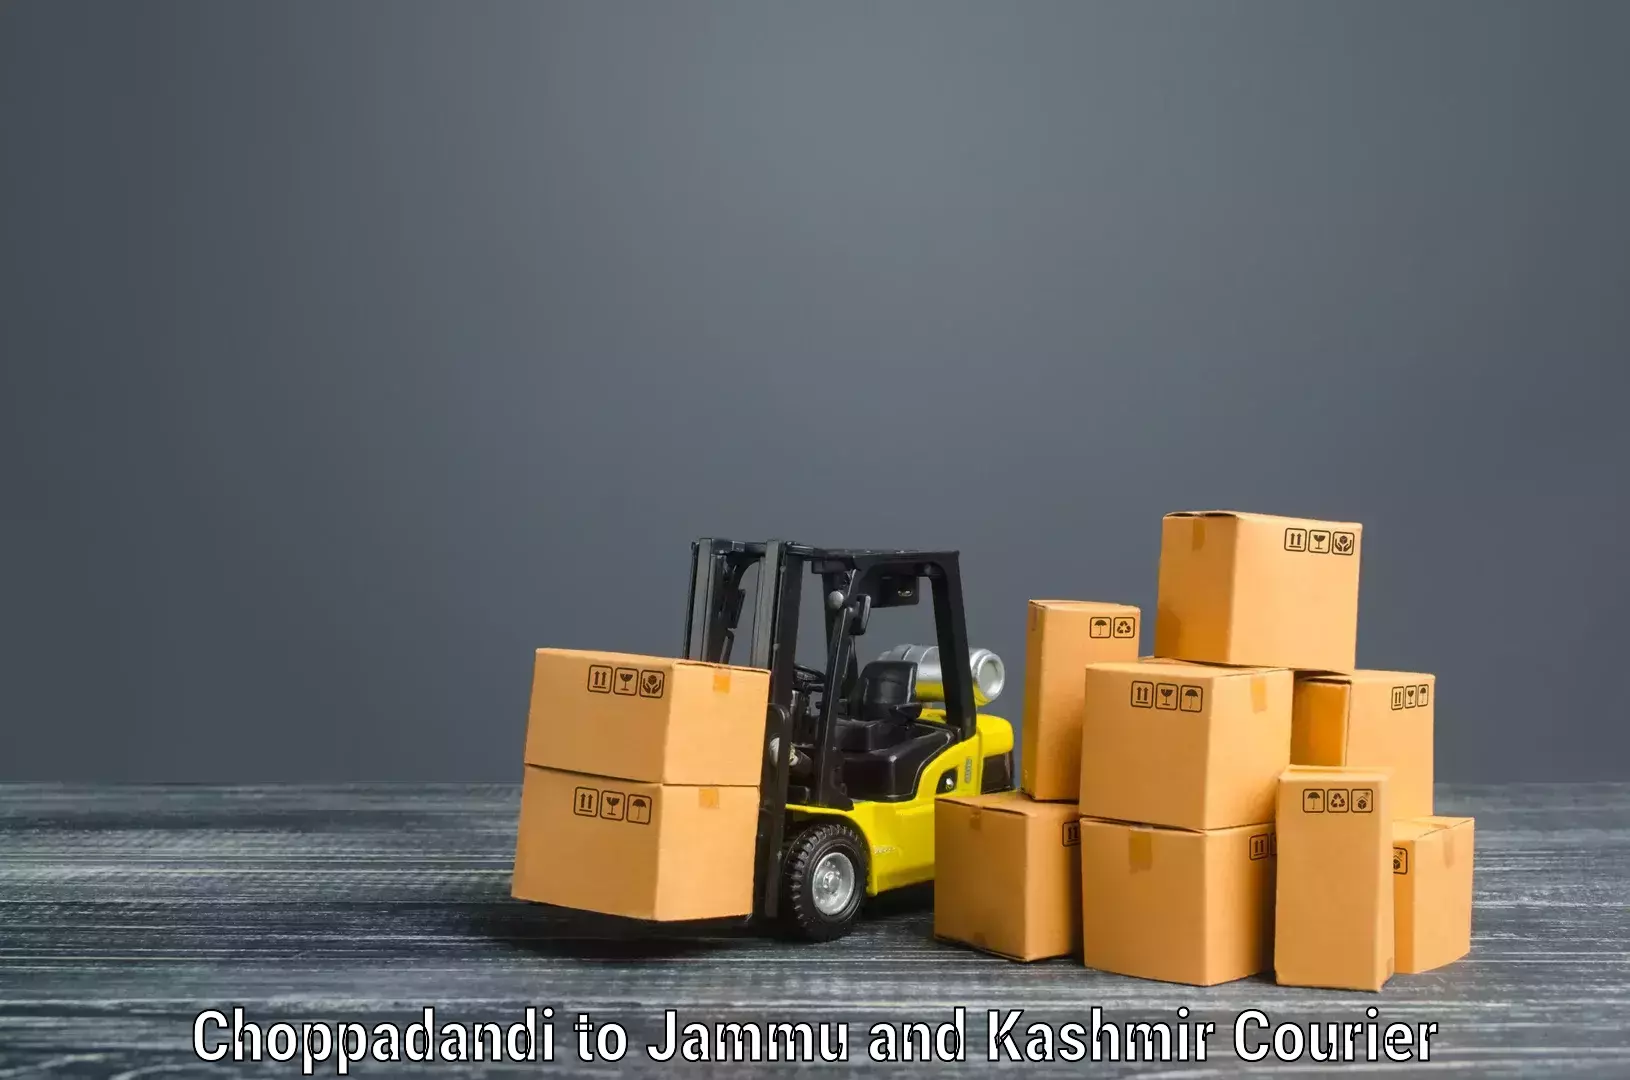 Furniture transport professionals Choppadandi to Jammu and Kashmir